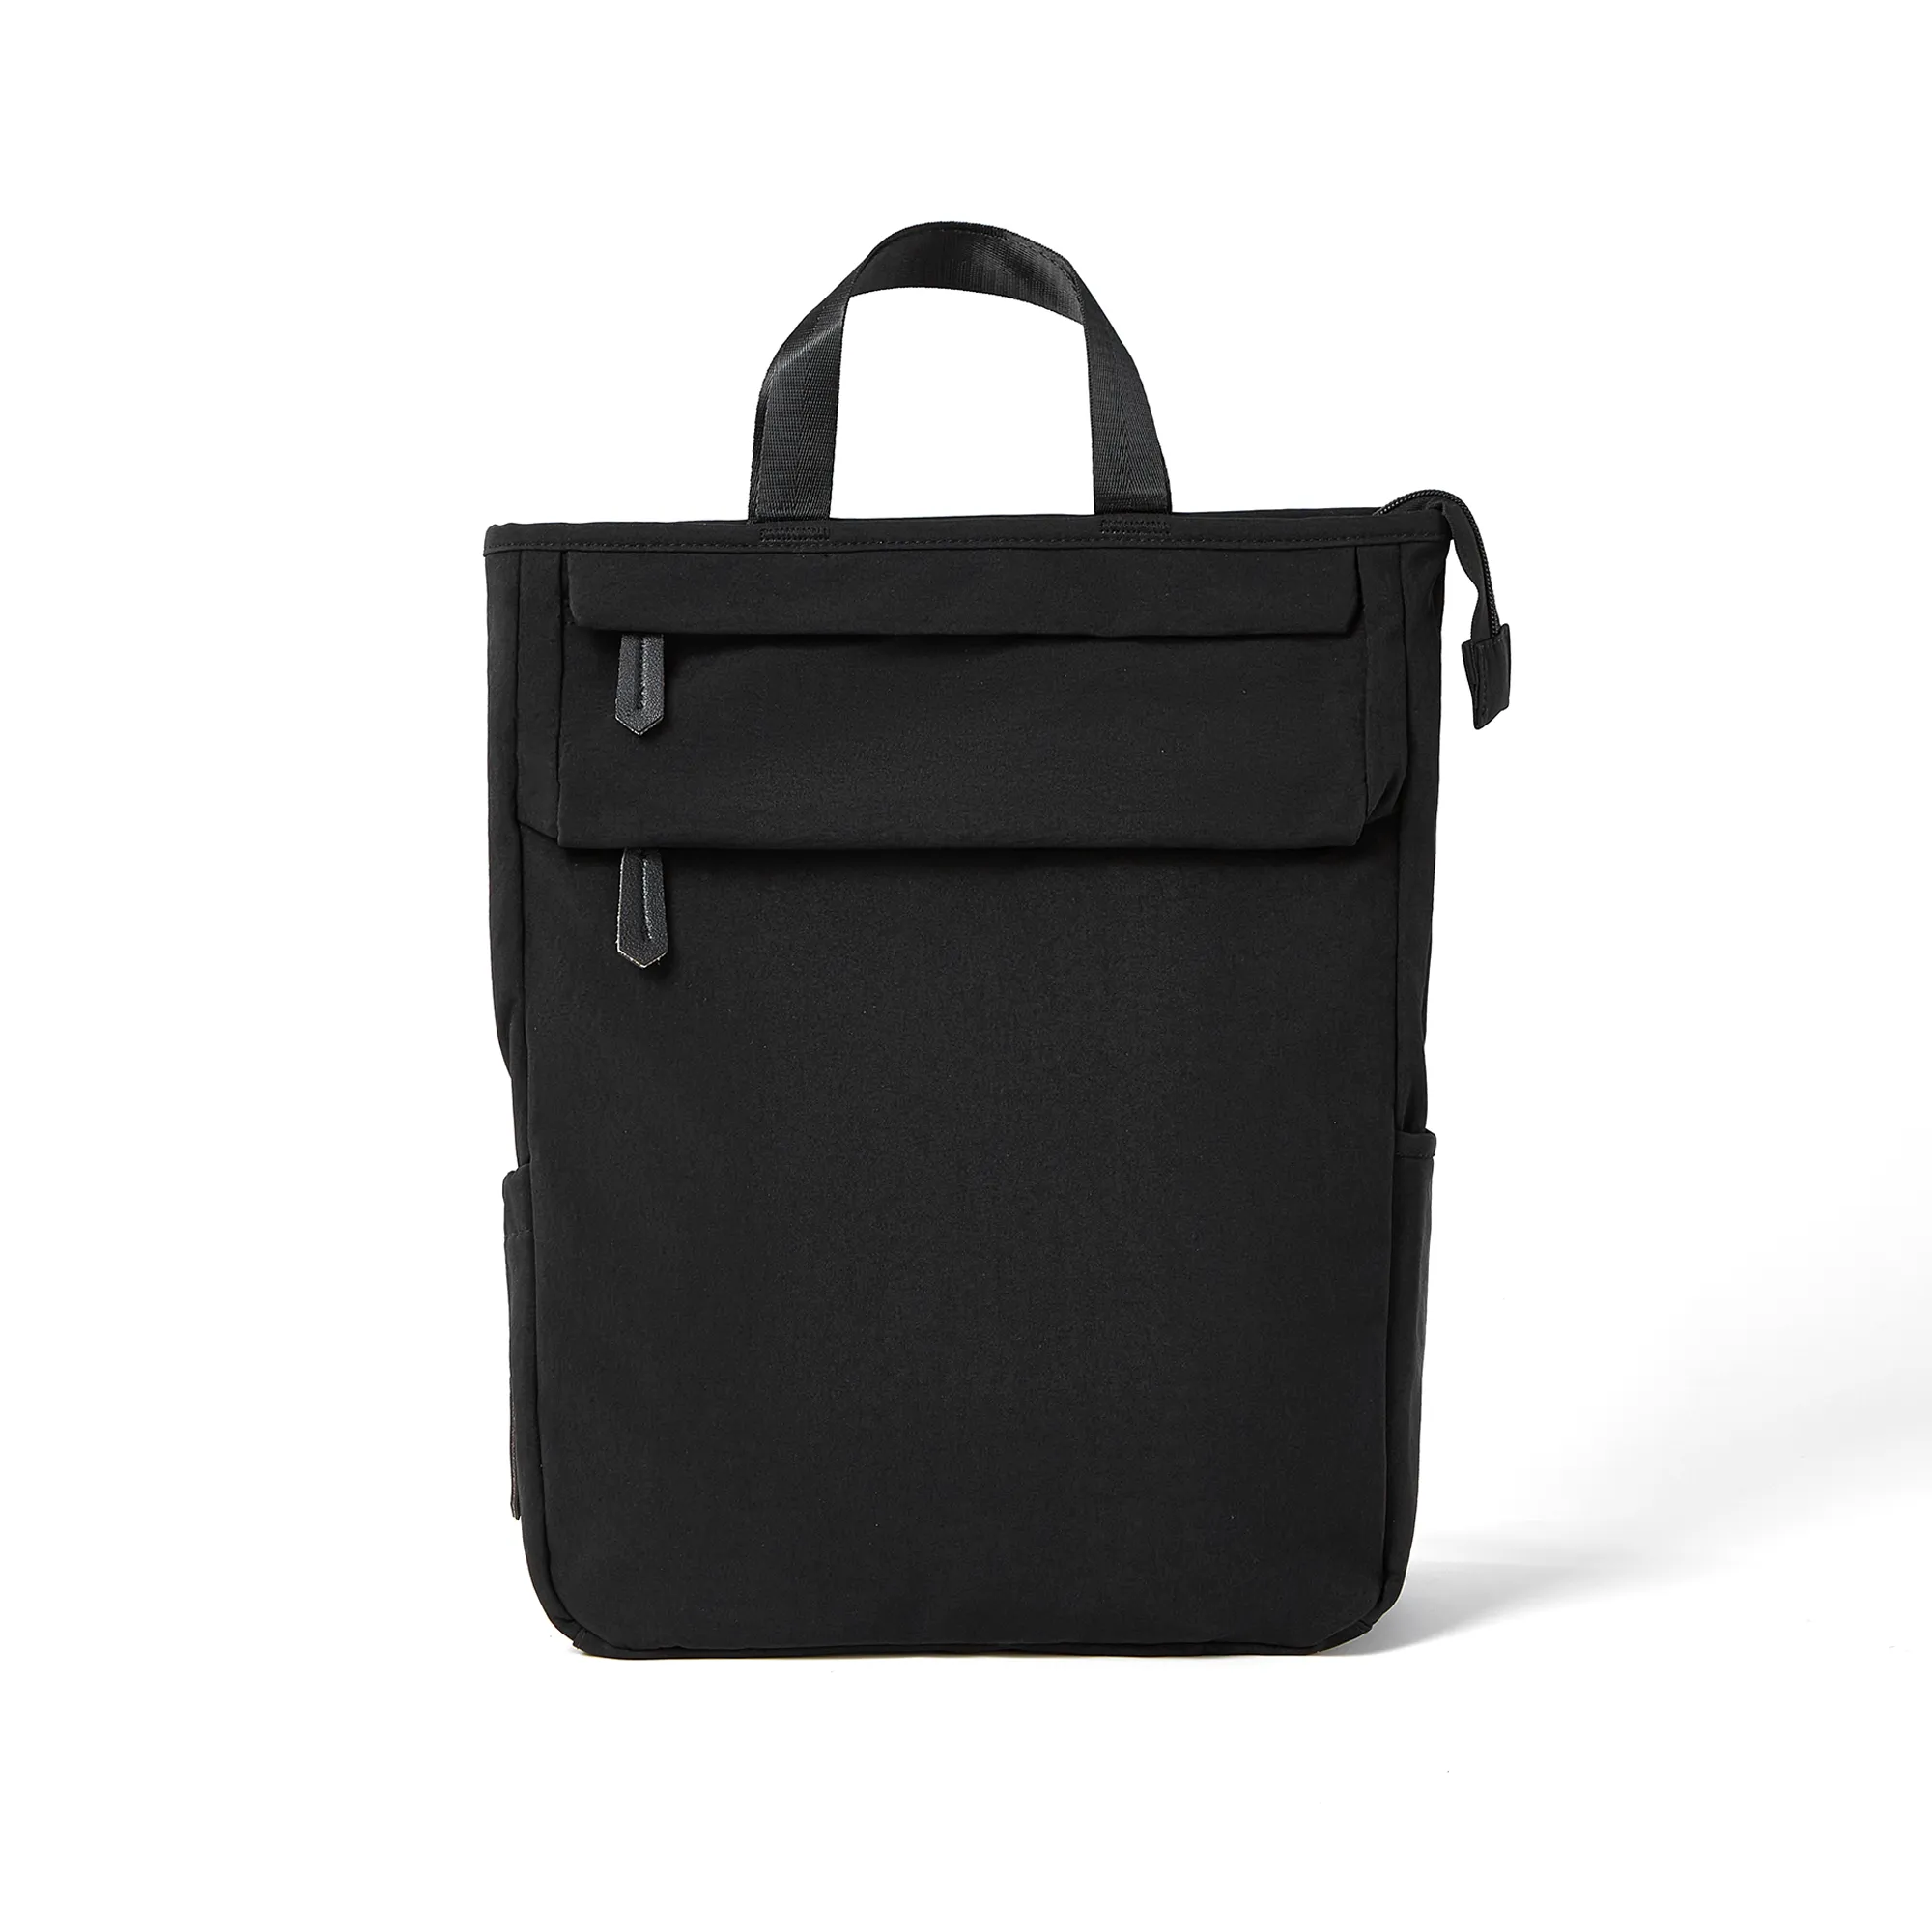 Baby Bag Backpack, Multi-functional Large Capacity Baby Bag